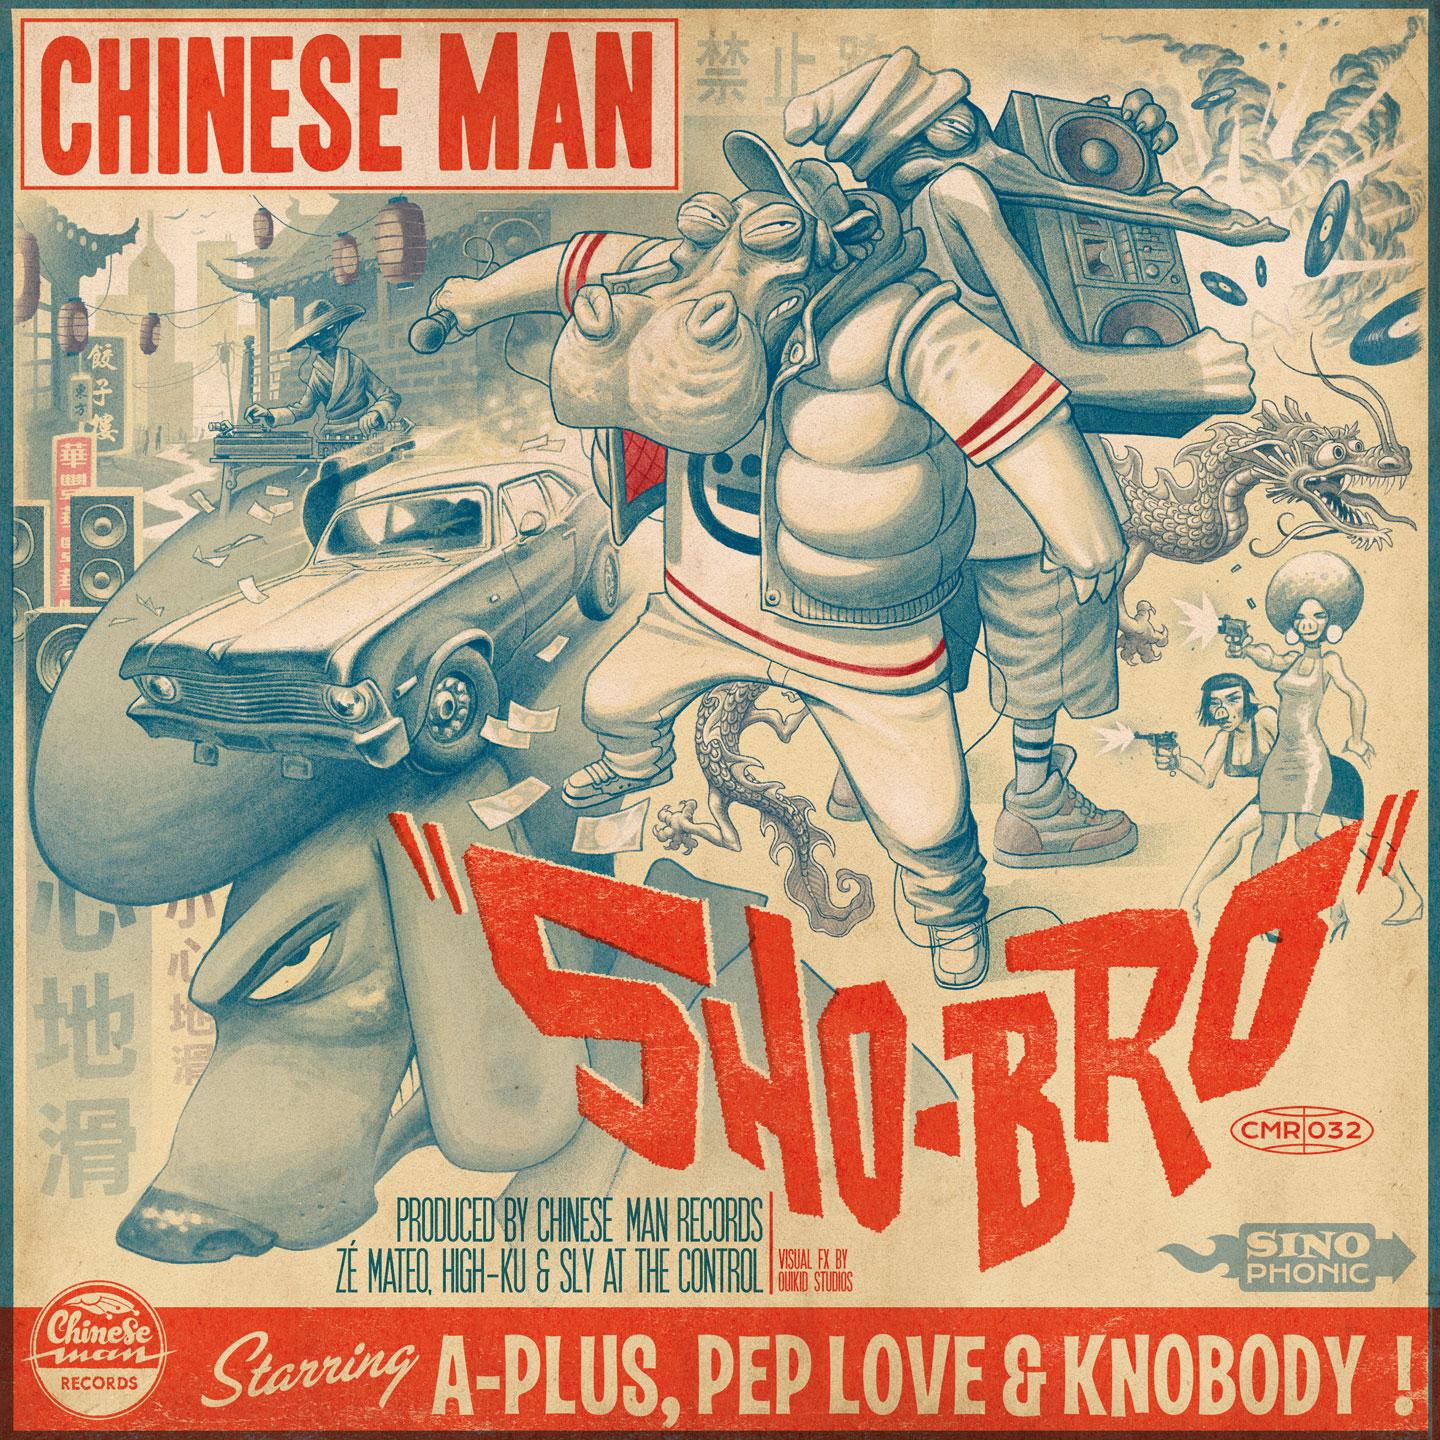 Sho-Bro (DJ Nu-Mark Remix)